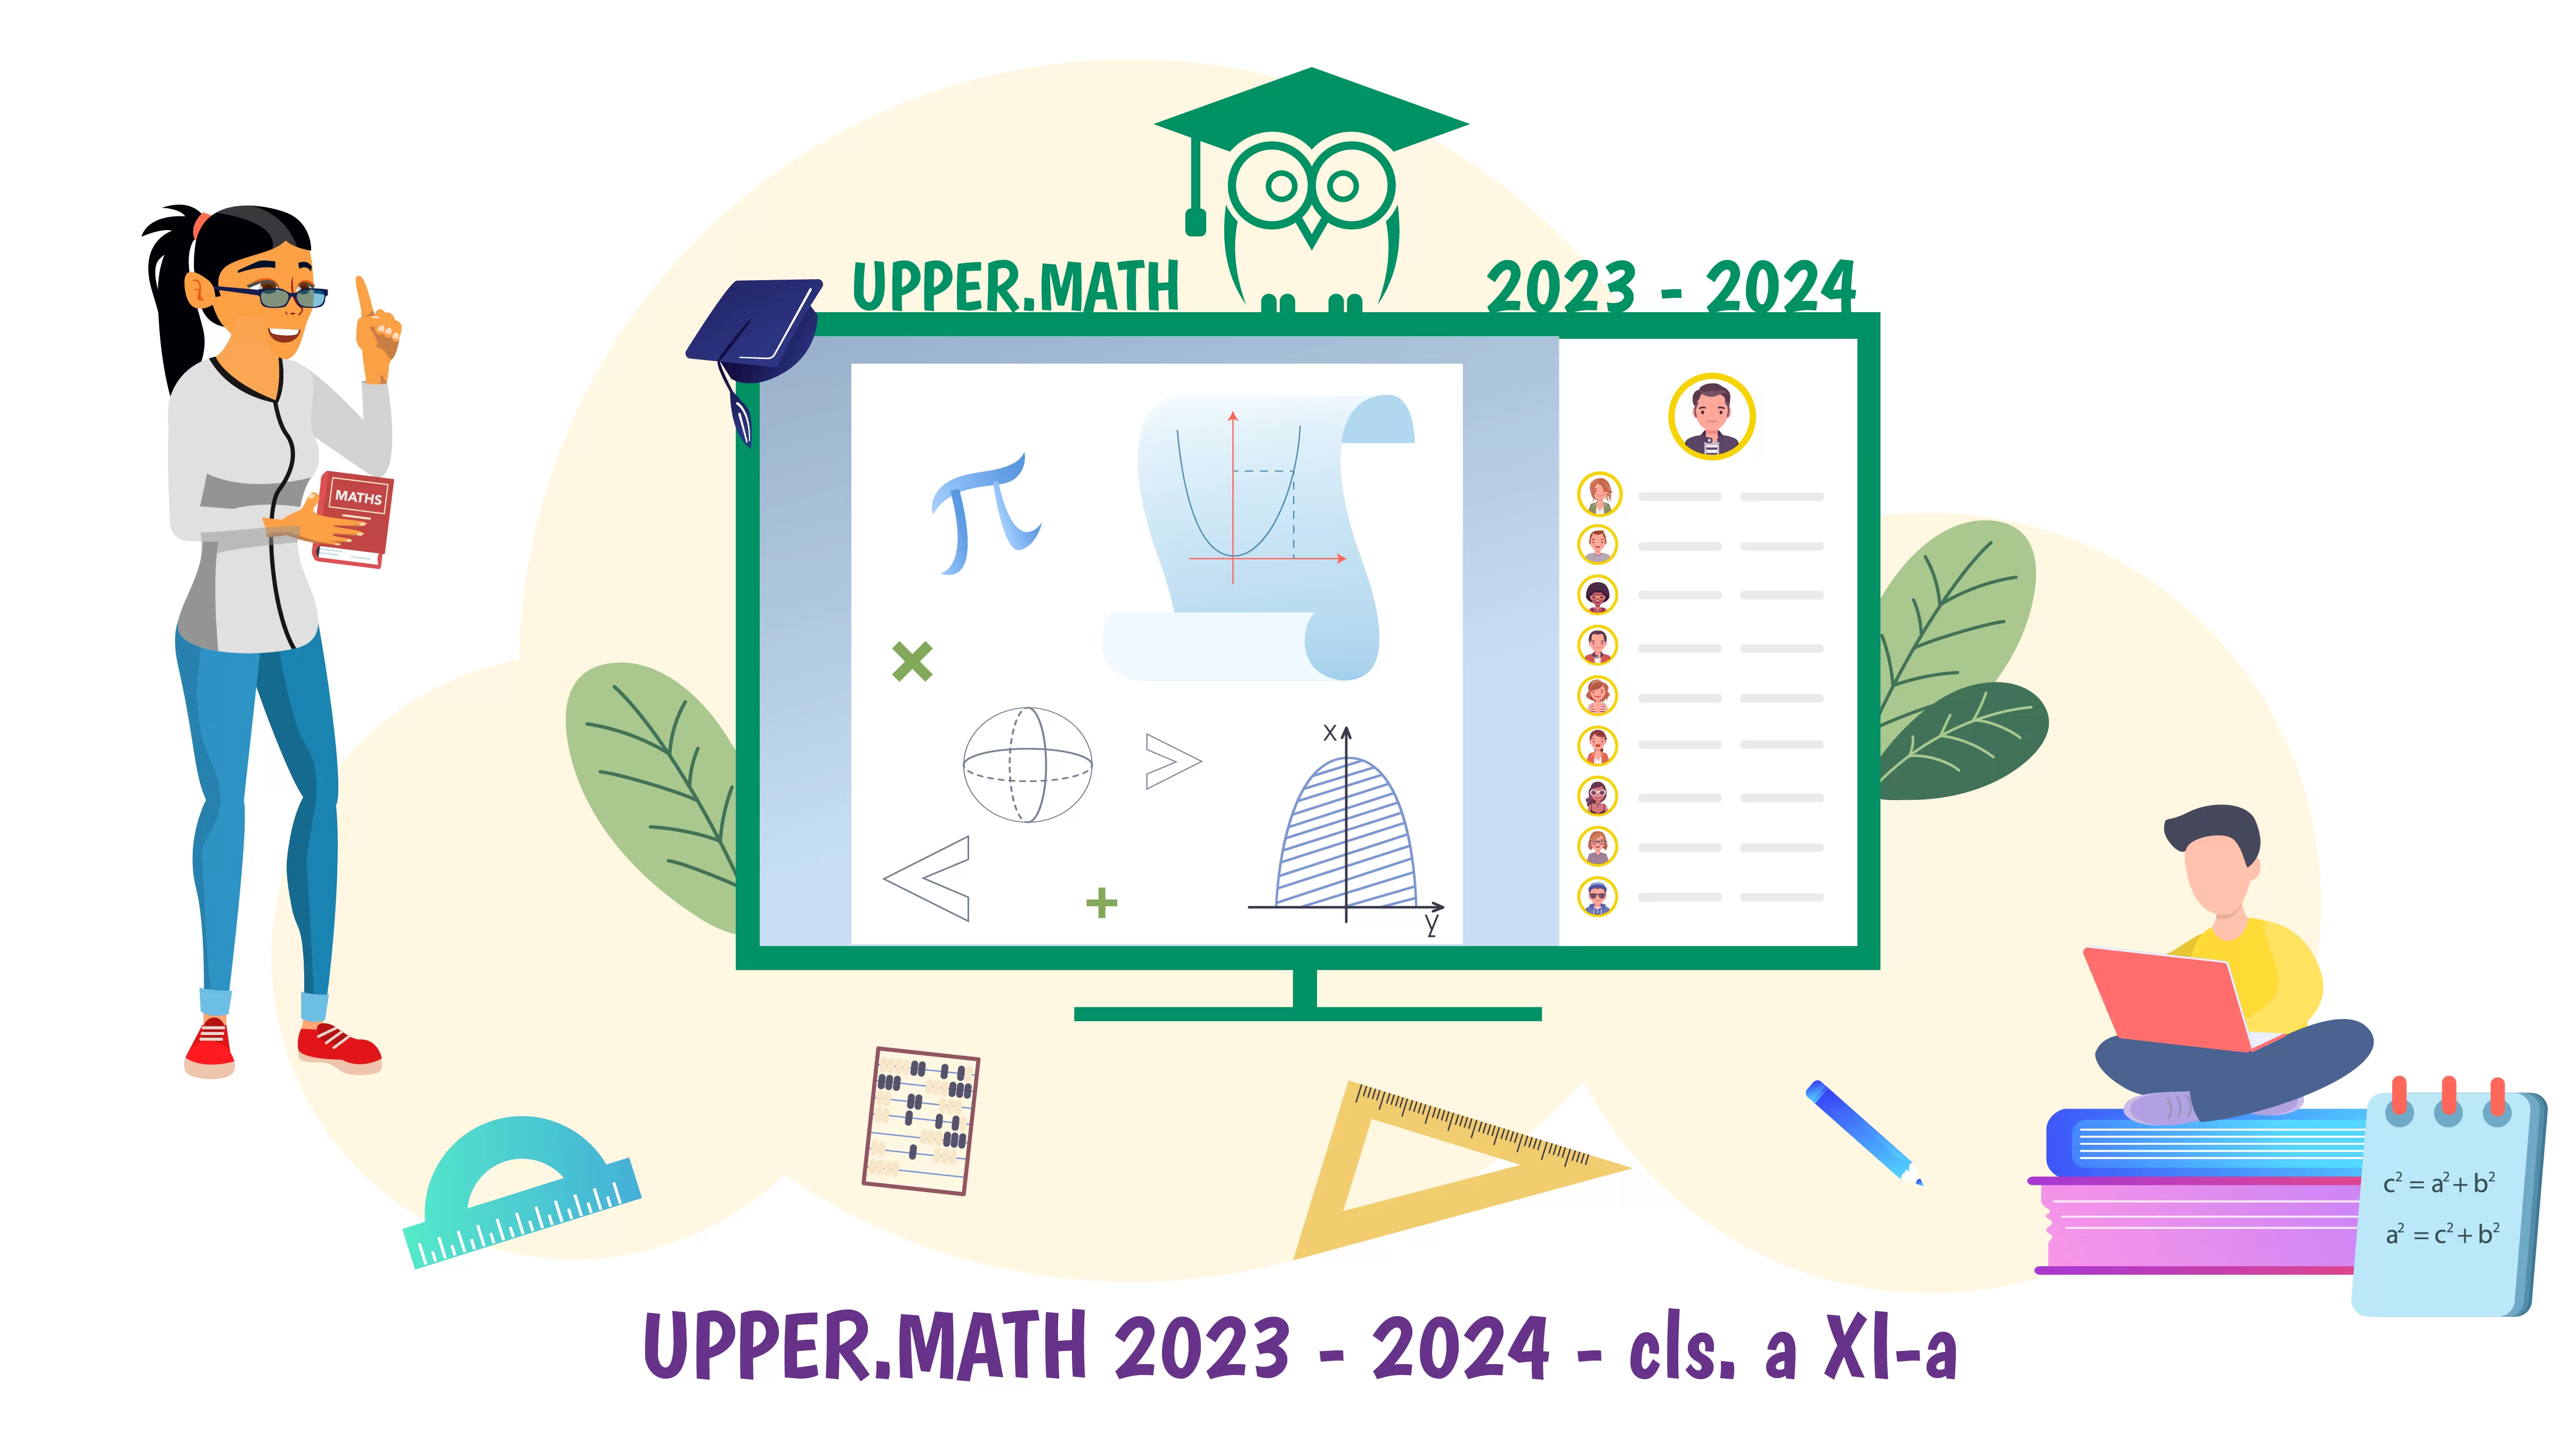 Upper.Math 2023-2024 clasa a XI-a - Cursuri de pregatire la matematica pentru olimpiada